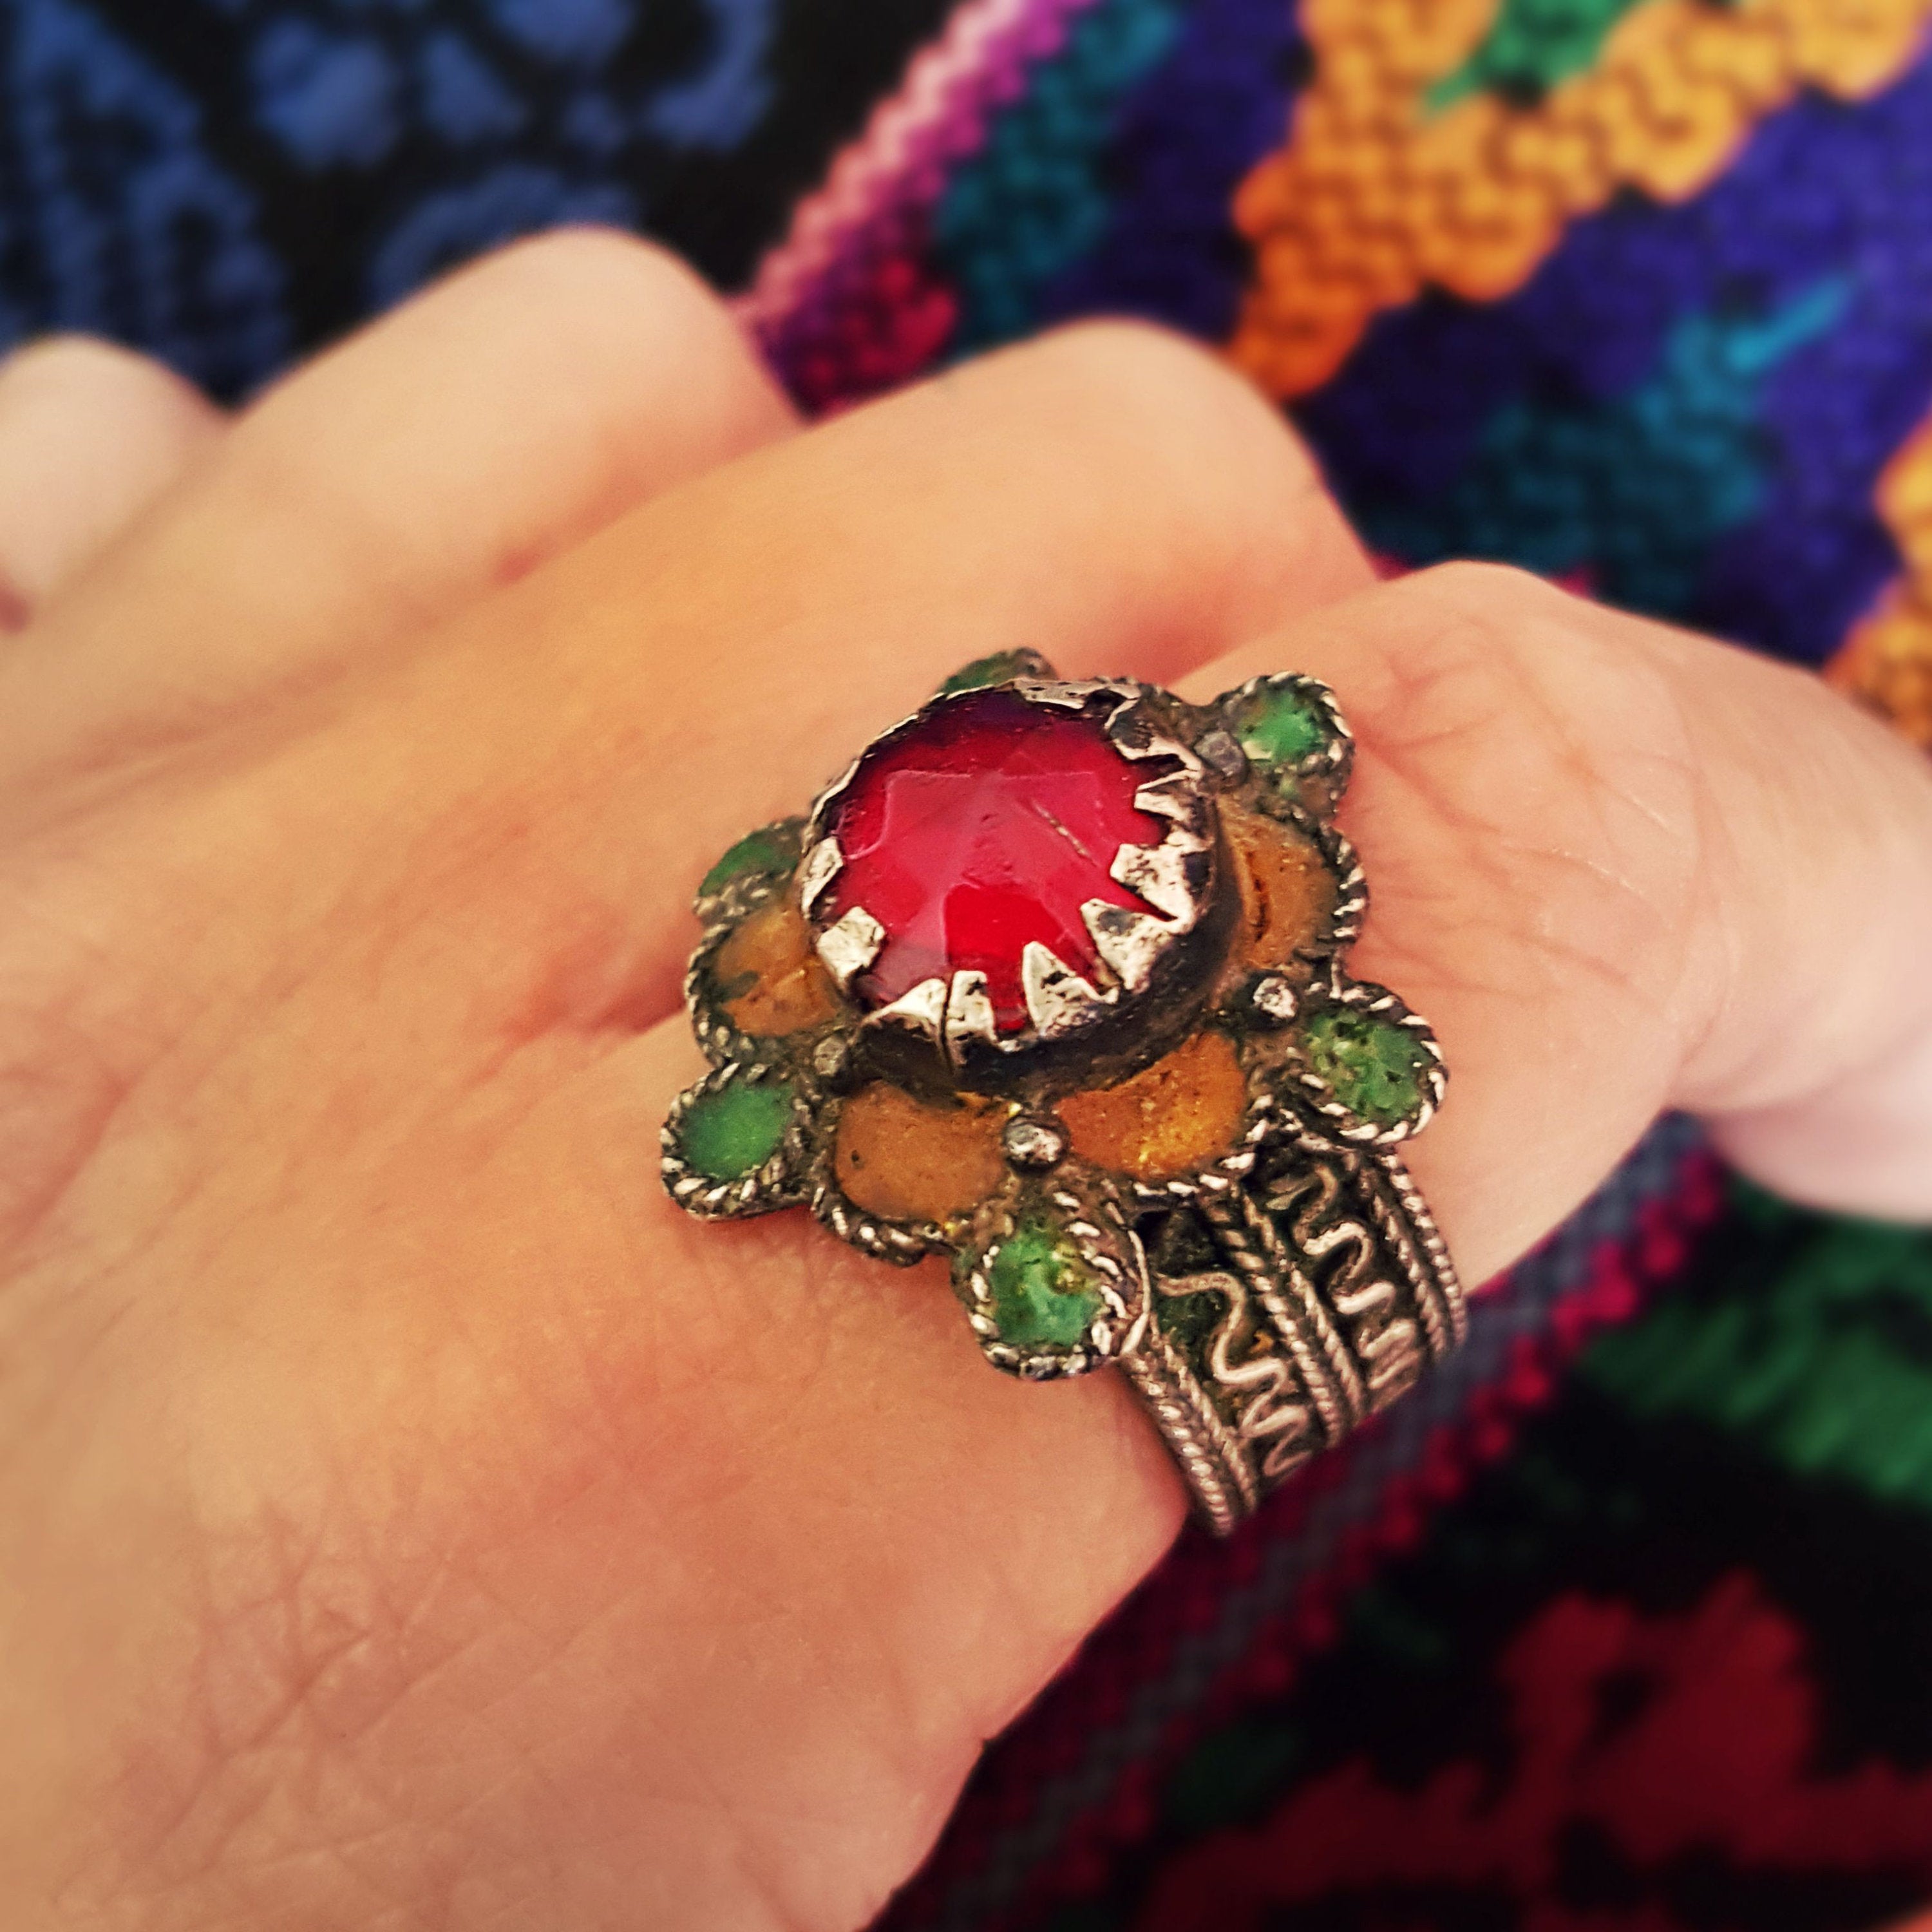 Berber Ring with Enamel - Size 8.5 - Berber Jewelry - Ethnic Ring - Tribal Ring - Moroccan Jewelry - Ethnic Jewelry